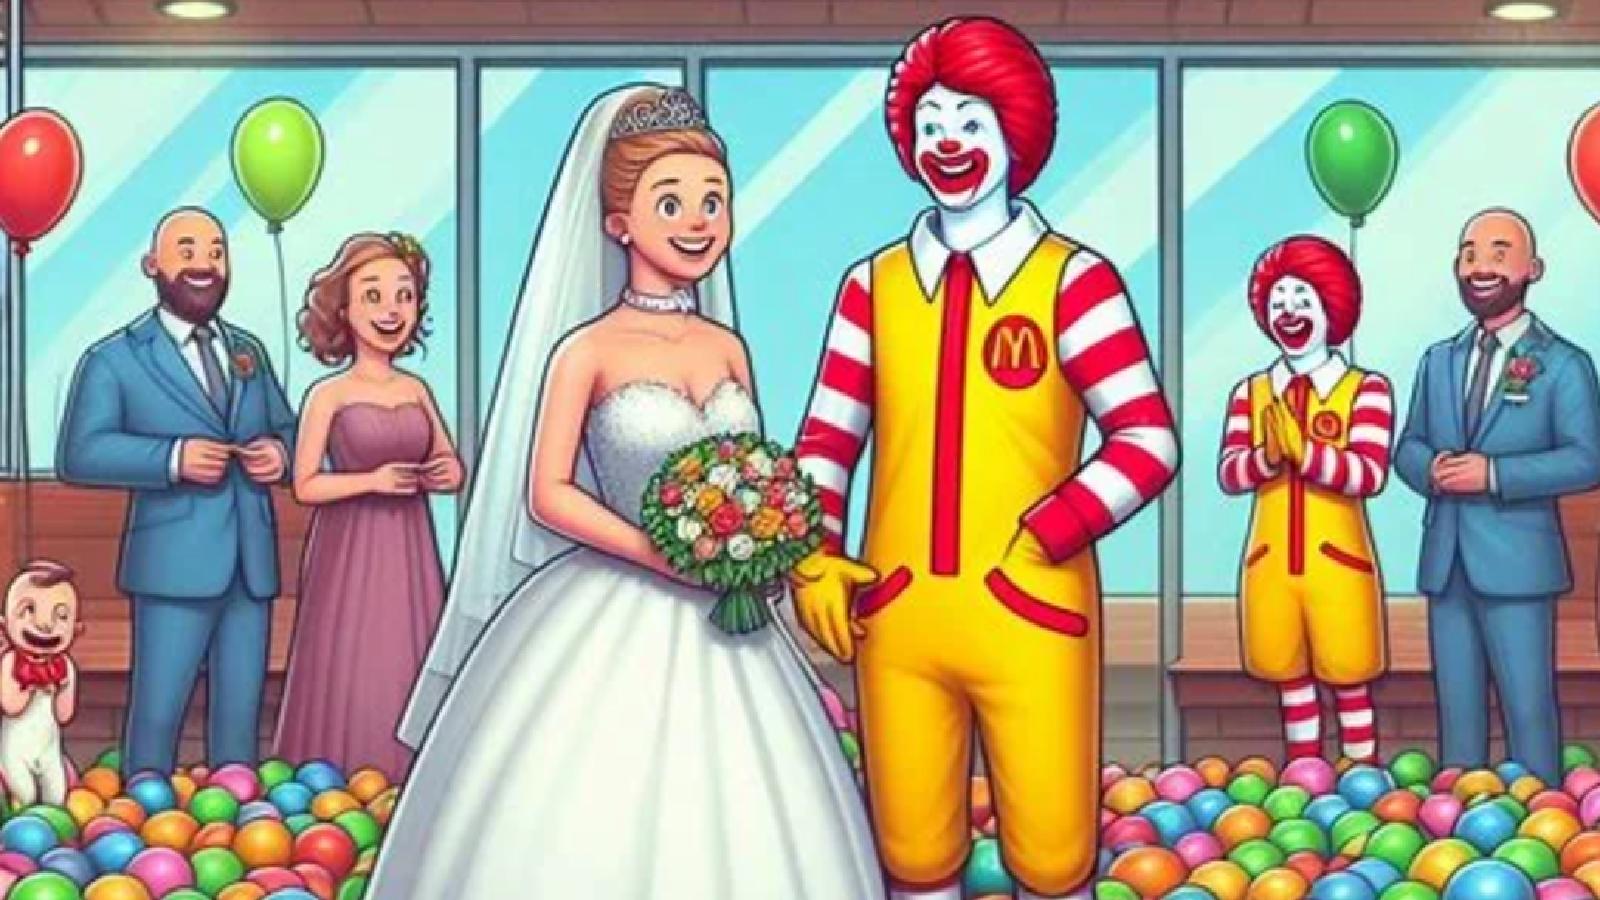 McDonald's wedding